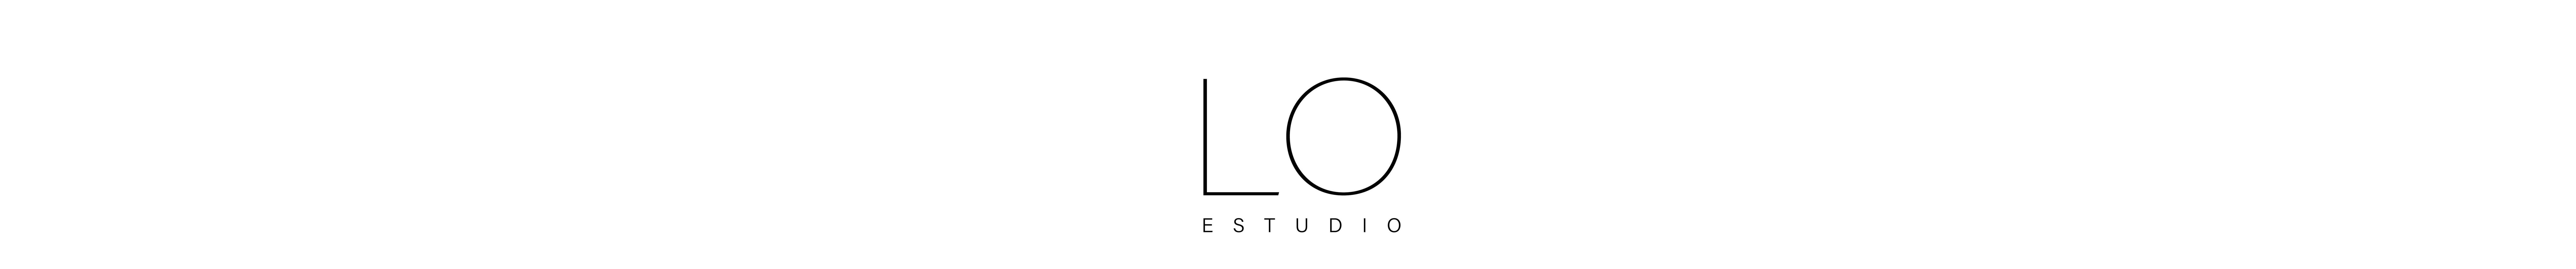 Lo Estudio's profile banner